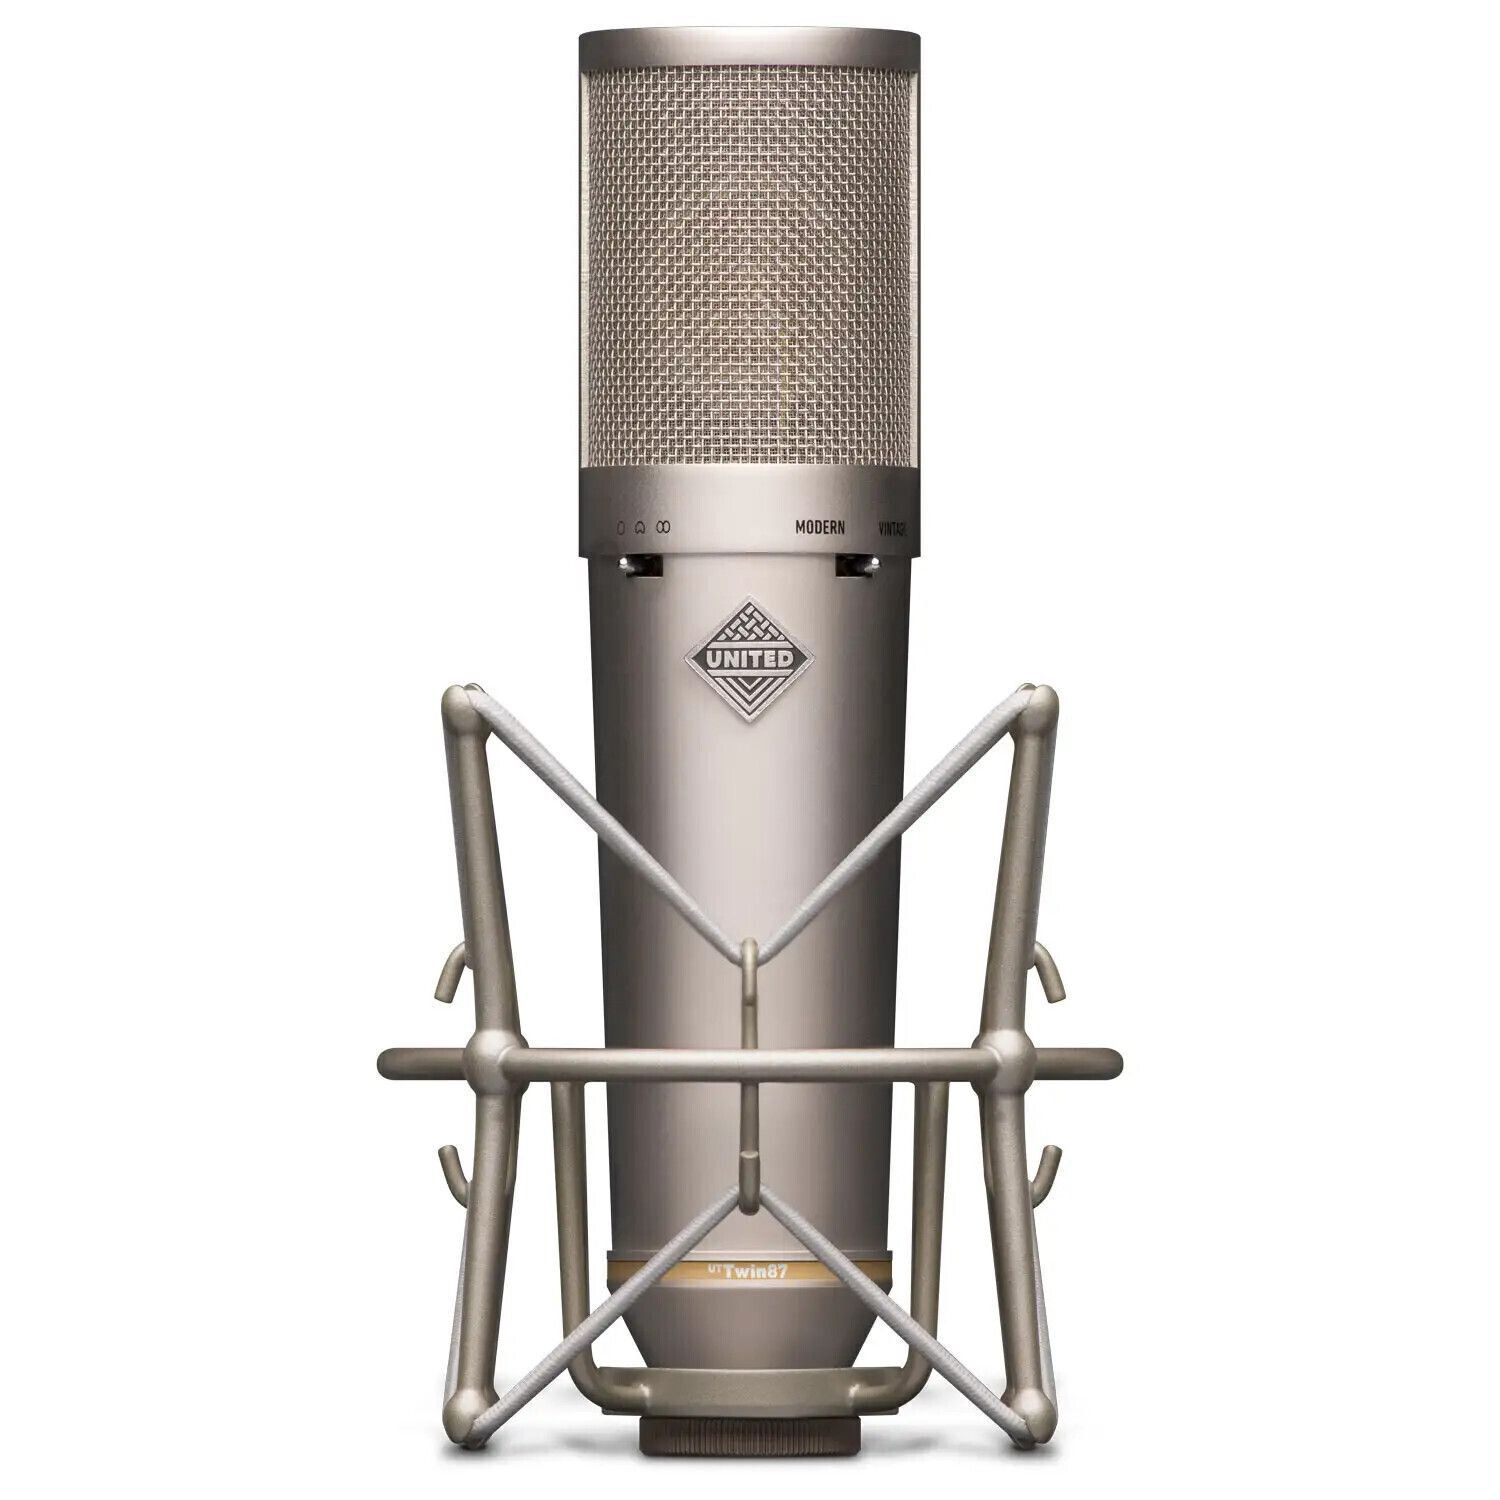 United Studio Technologies Twin 87 Microphone Конденсаторные микрофоны